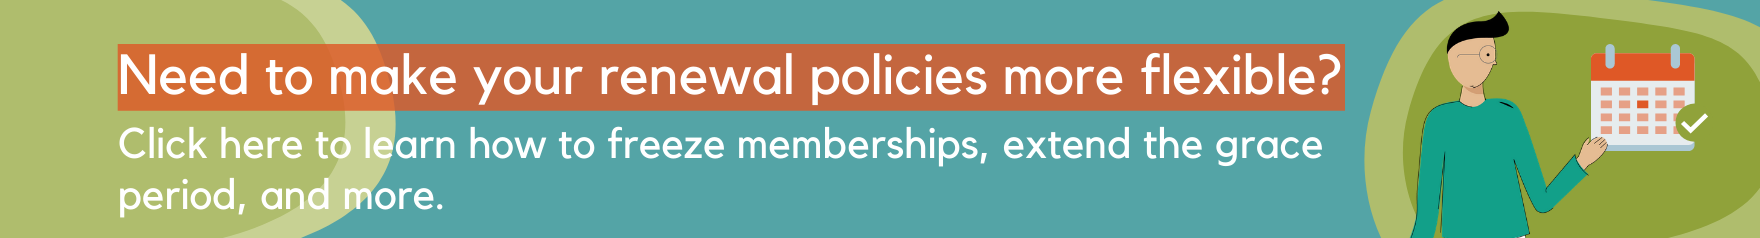 Member renewal flexibility banner